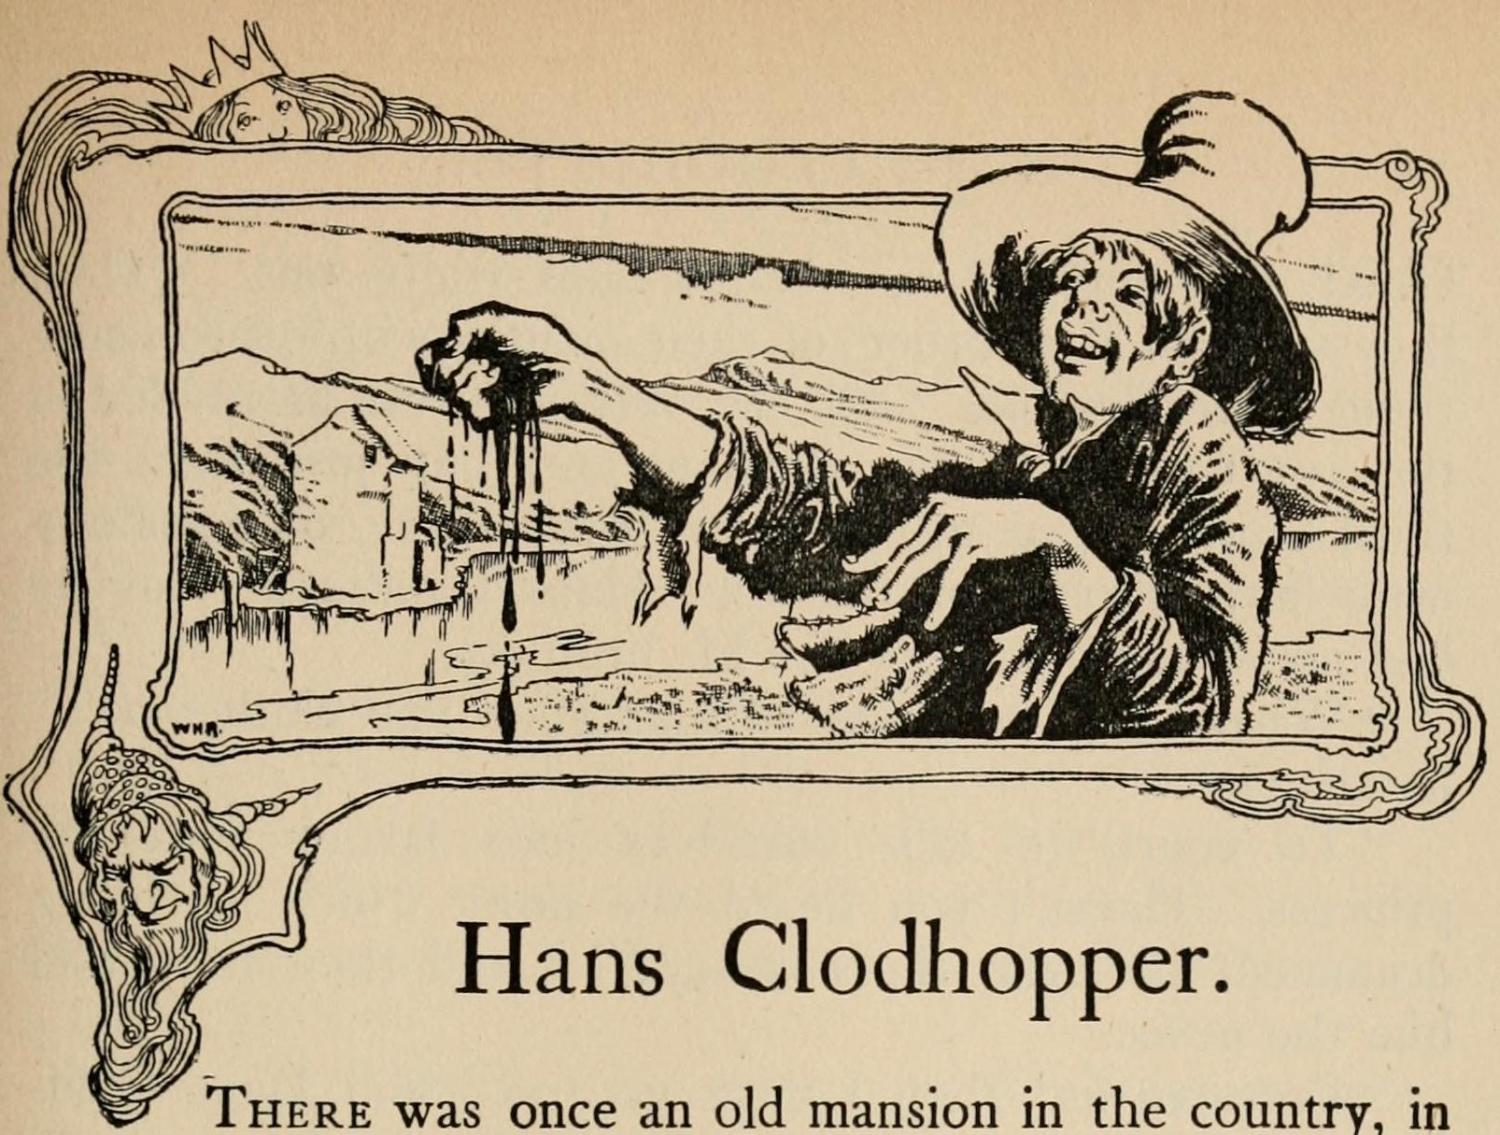 Hans Clodhopper